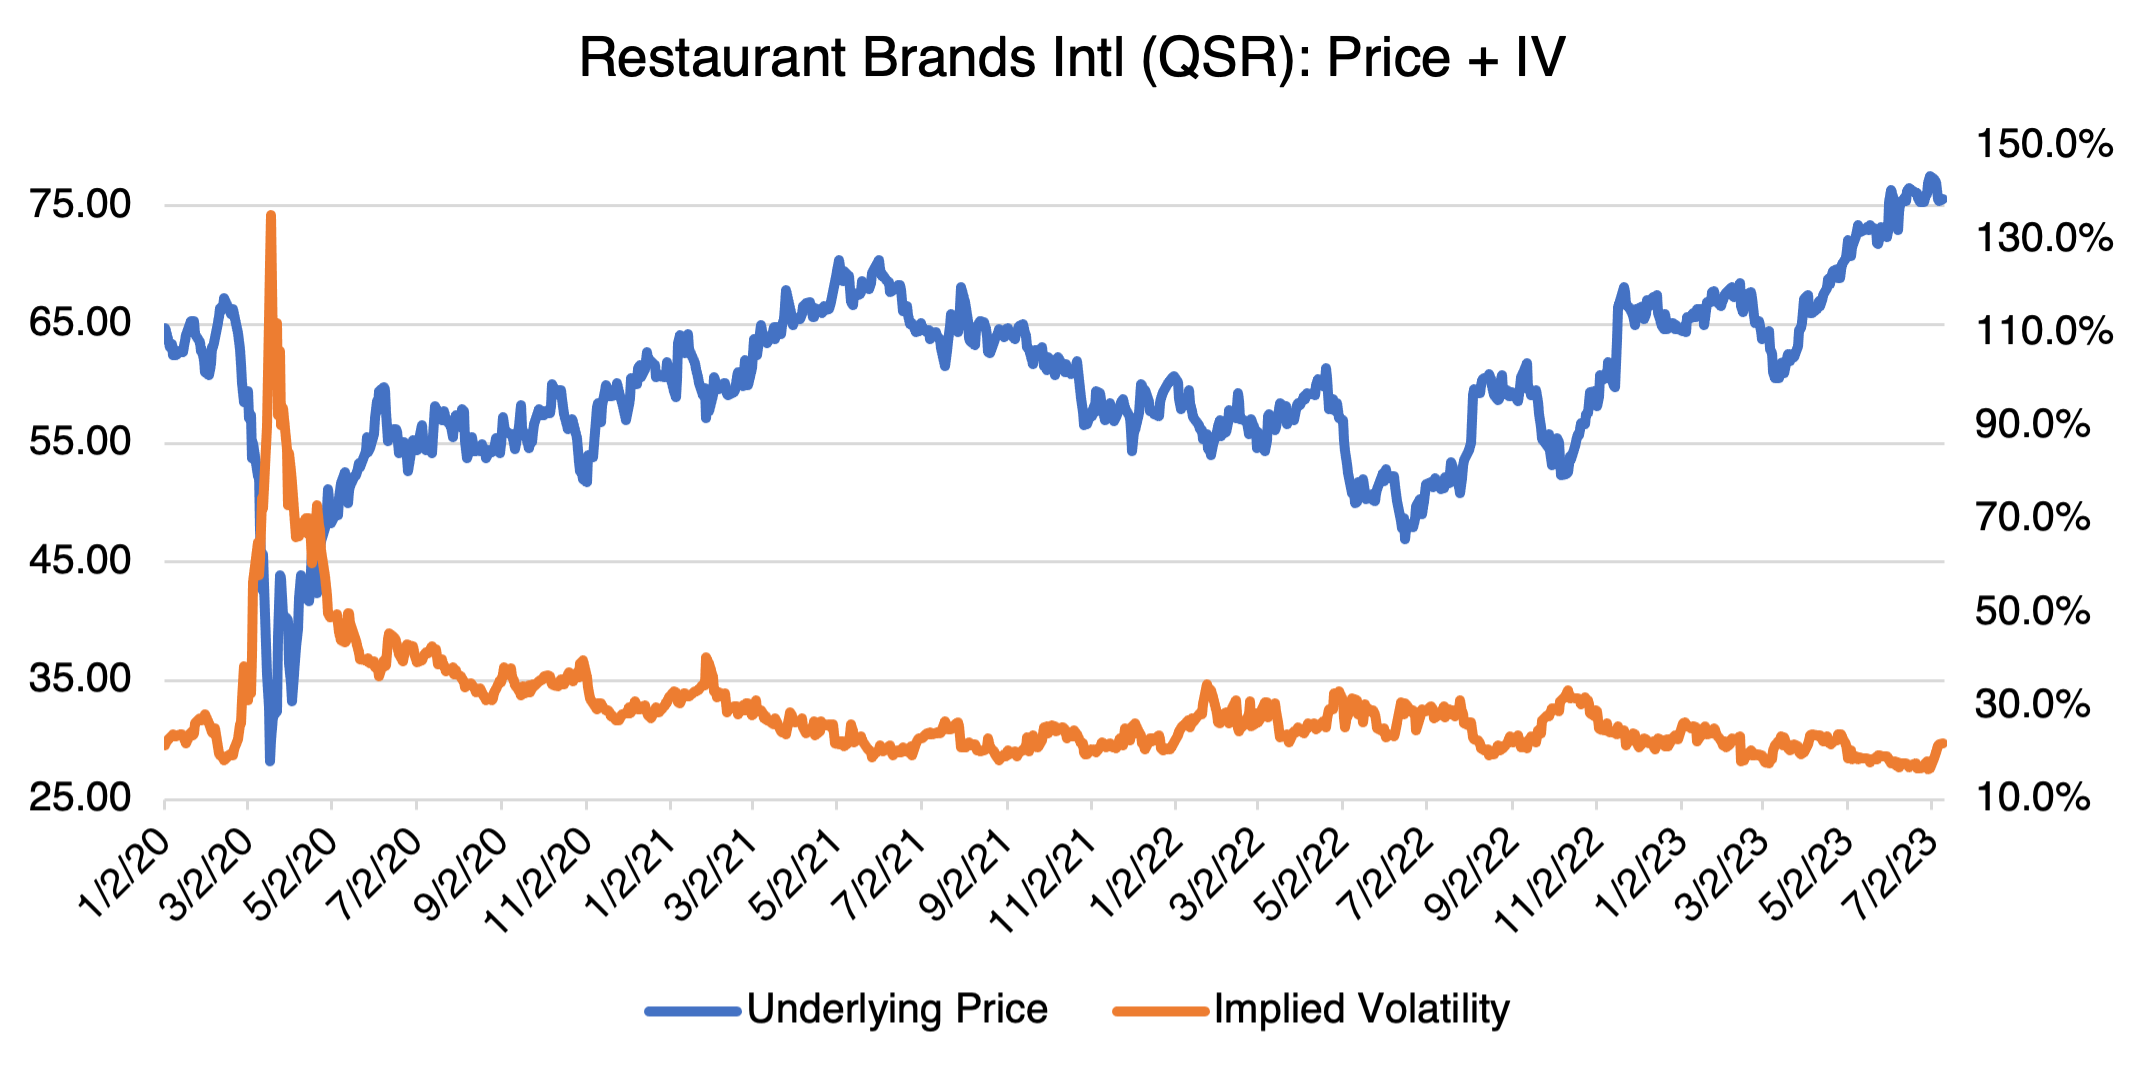 Restaurant Brands Intl (QSR): Price + IV